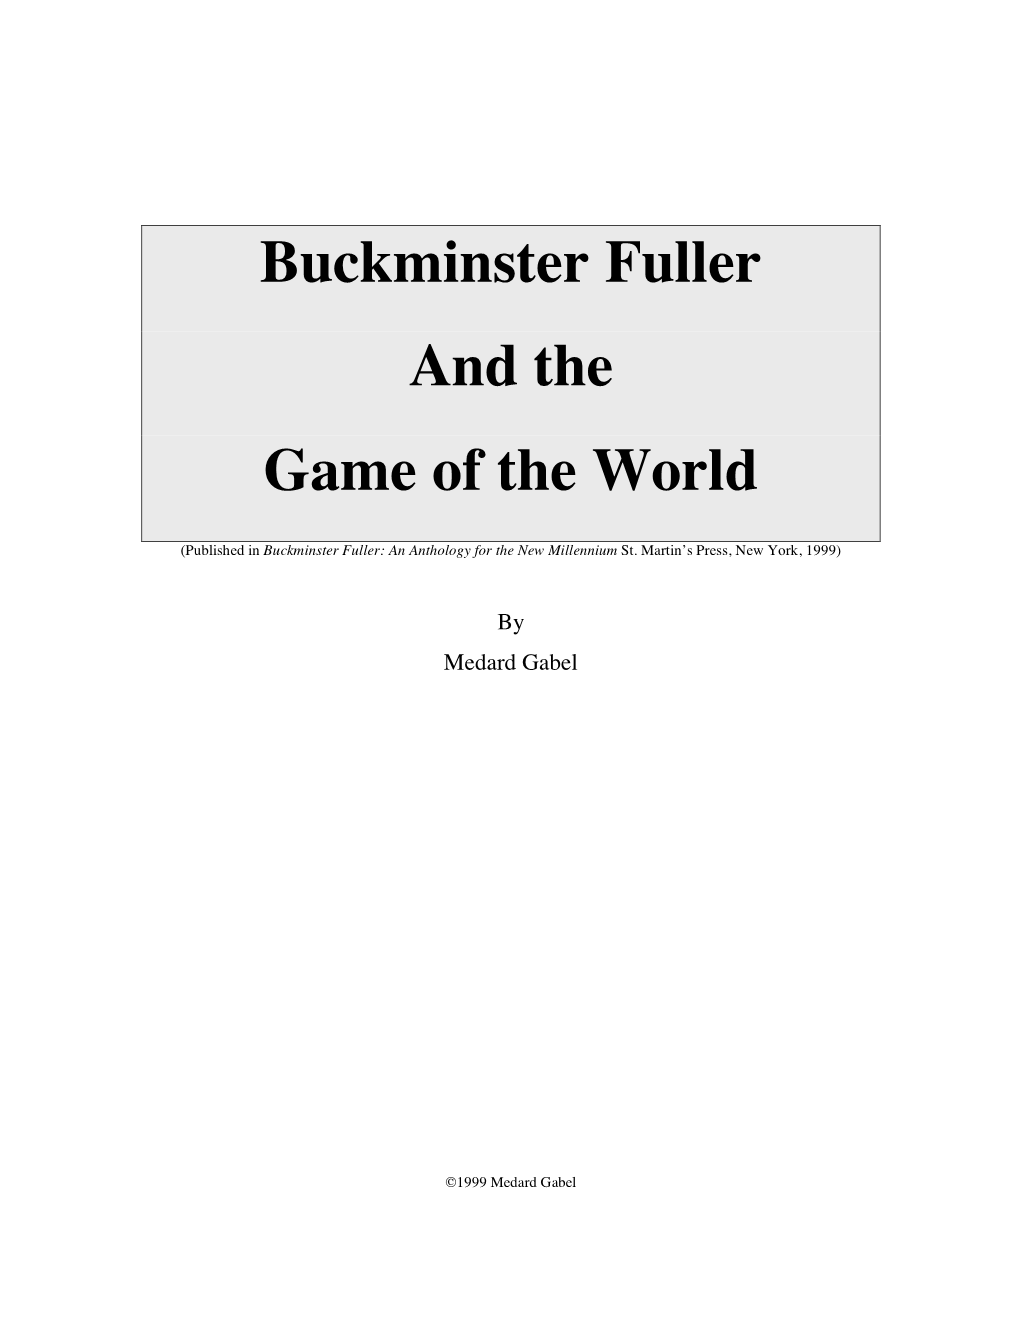 Buckminster Fuller and the Game of the World